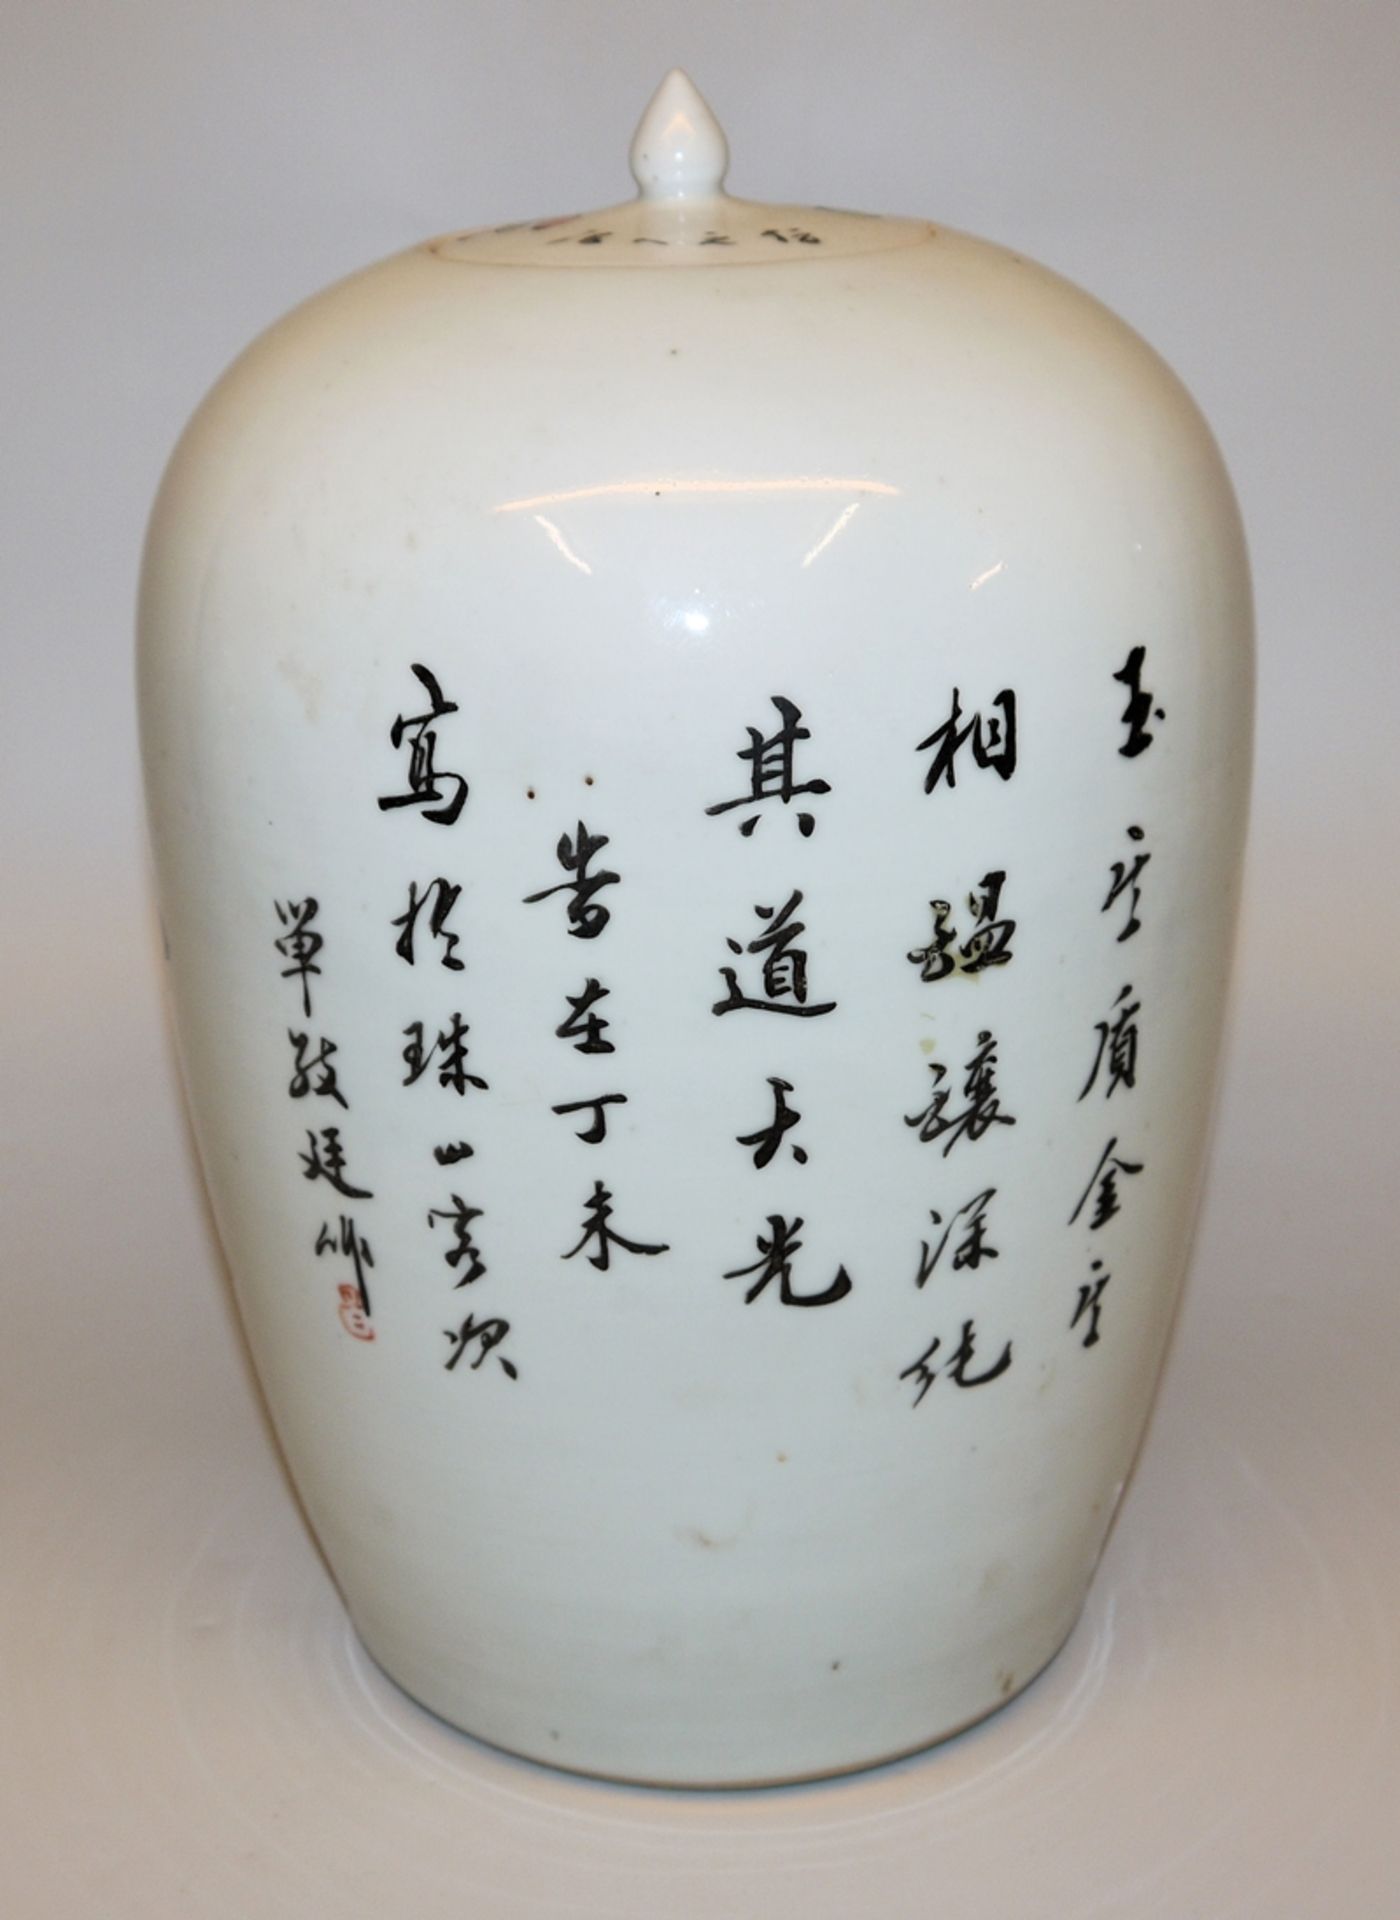 Porcelain pot with bogu decoration, late Qing/Republic period, China circa 1900 - Image 2 of 2